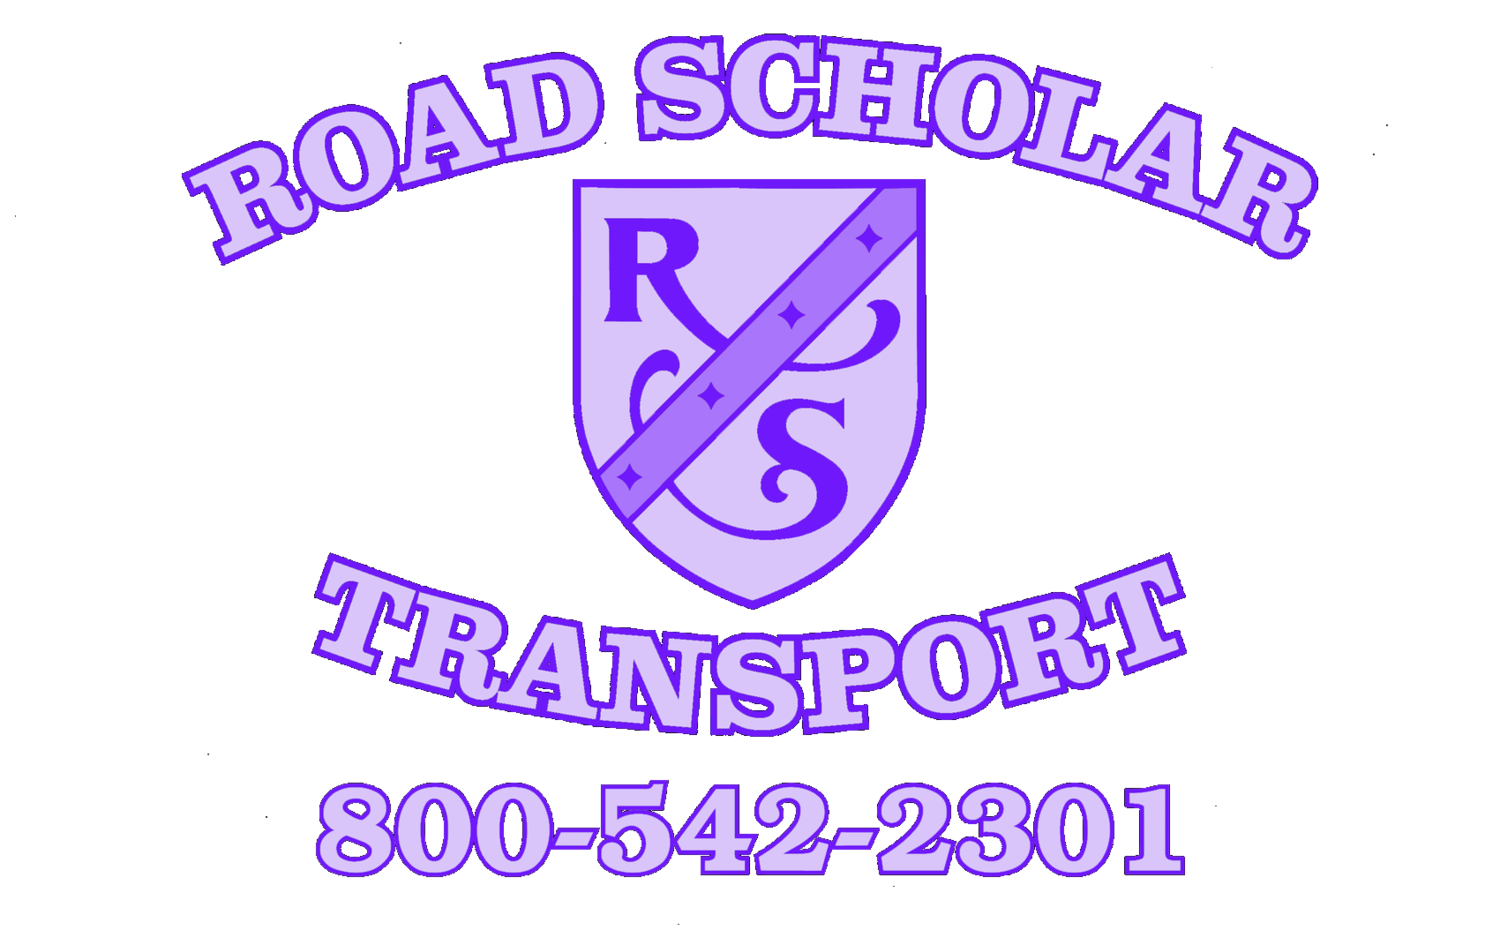 Road Scholar Transport